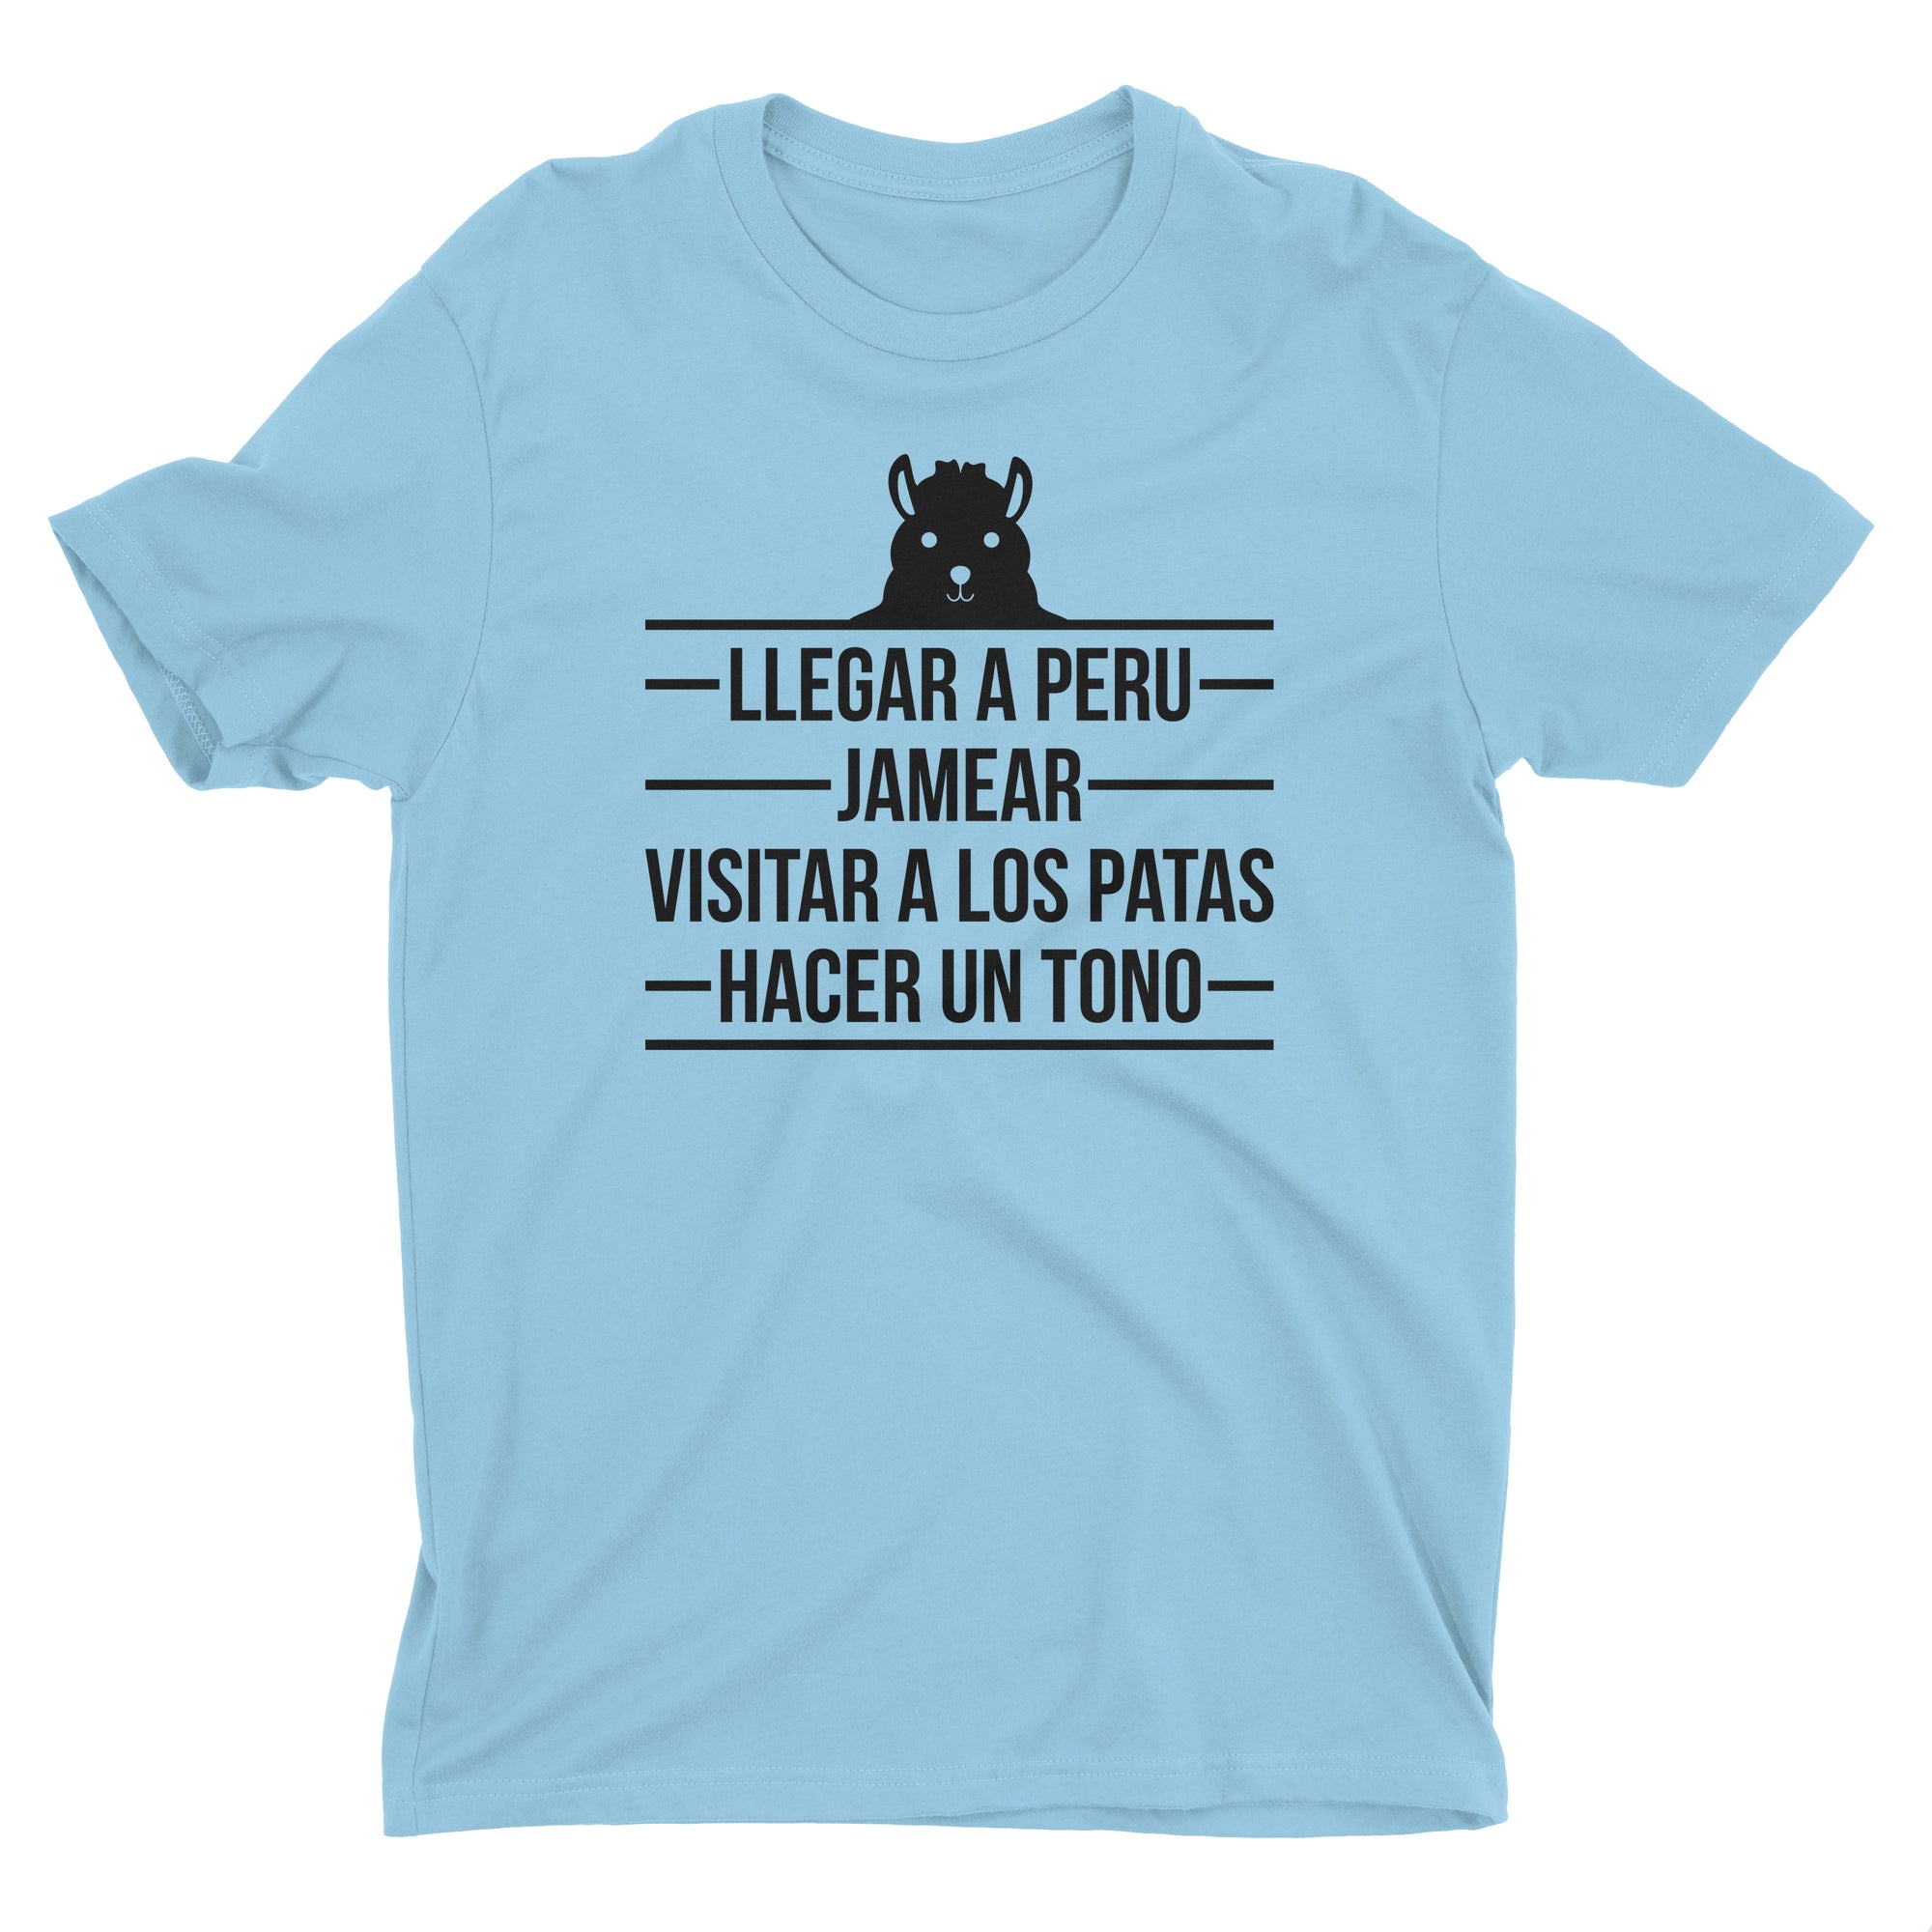 Llegar a Peru Funny Light Blue T-Shirt for Men